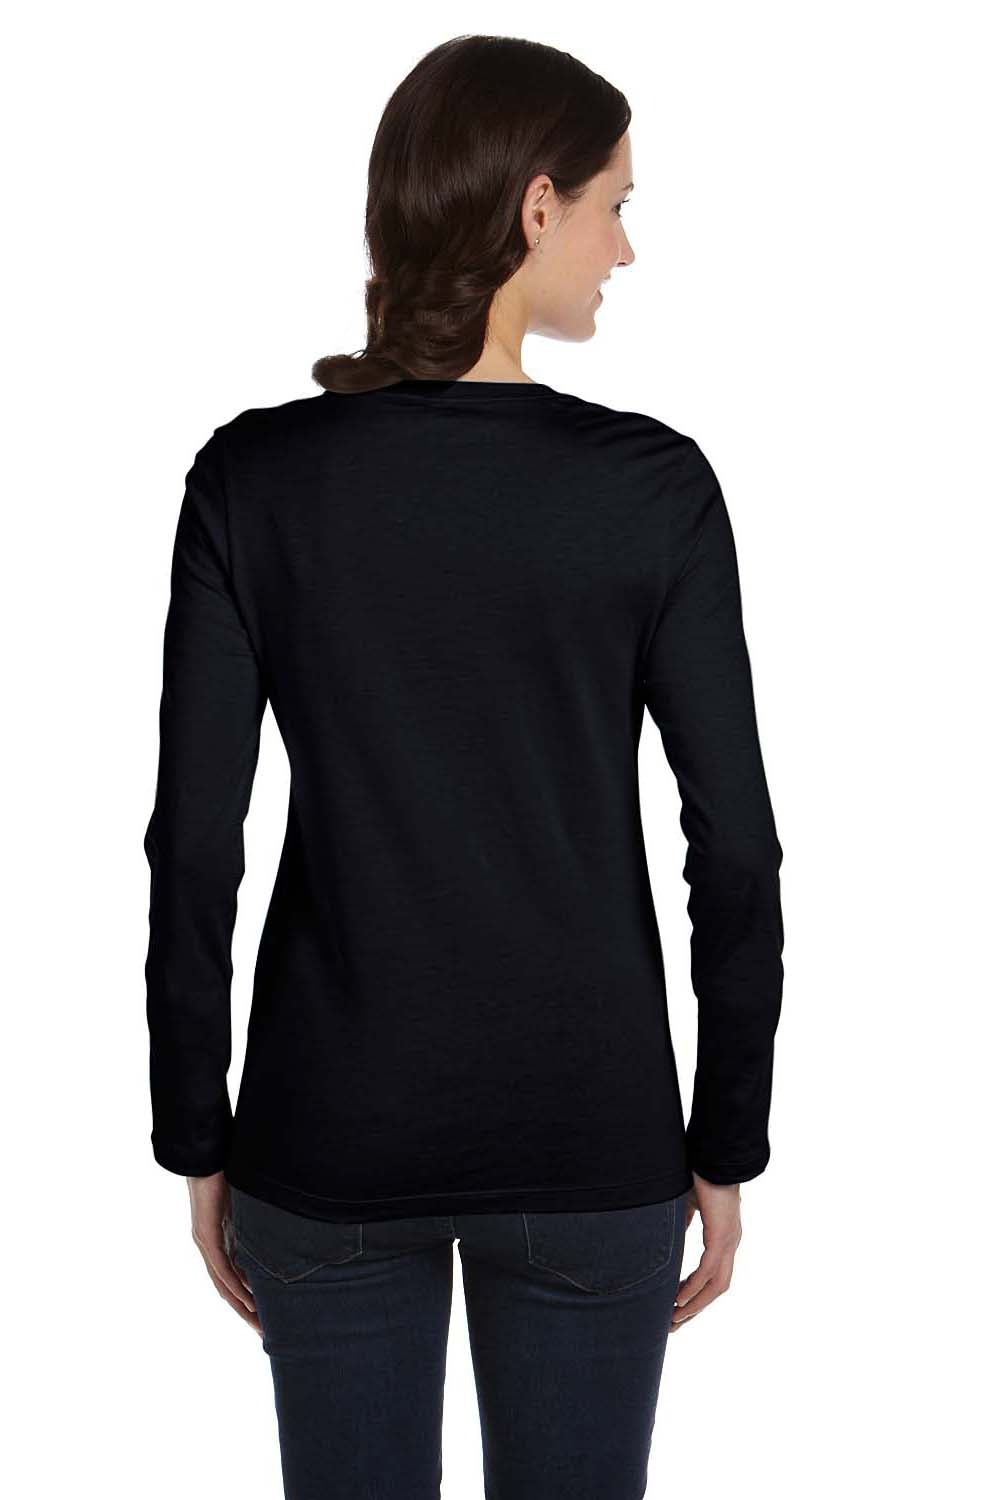 Bella + Canvas B6500/6500 Womens Jersey Long Sleeve Crewneck T-Shirt Black Model Back